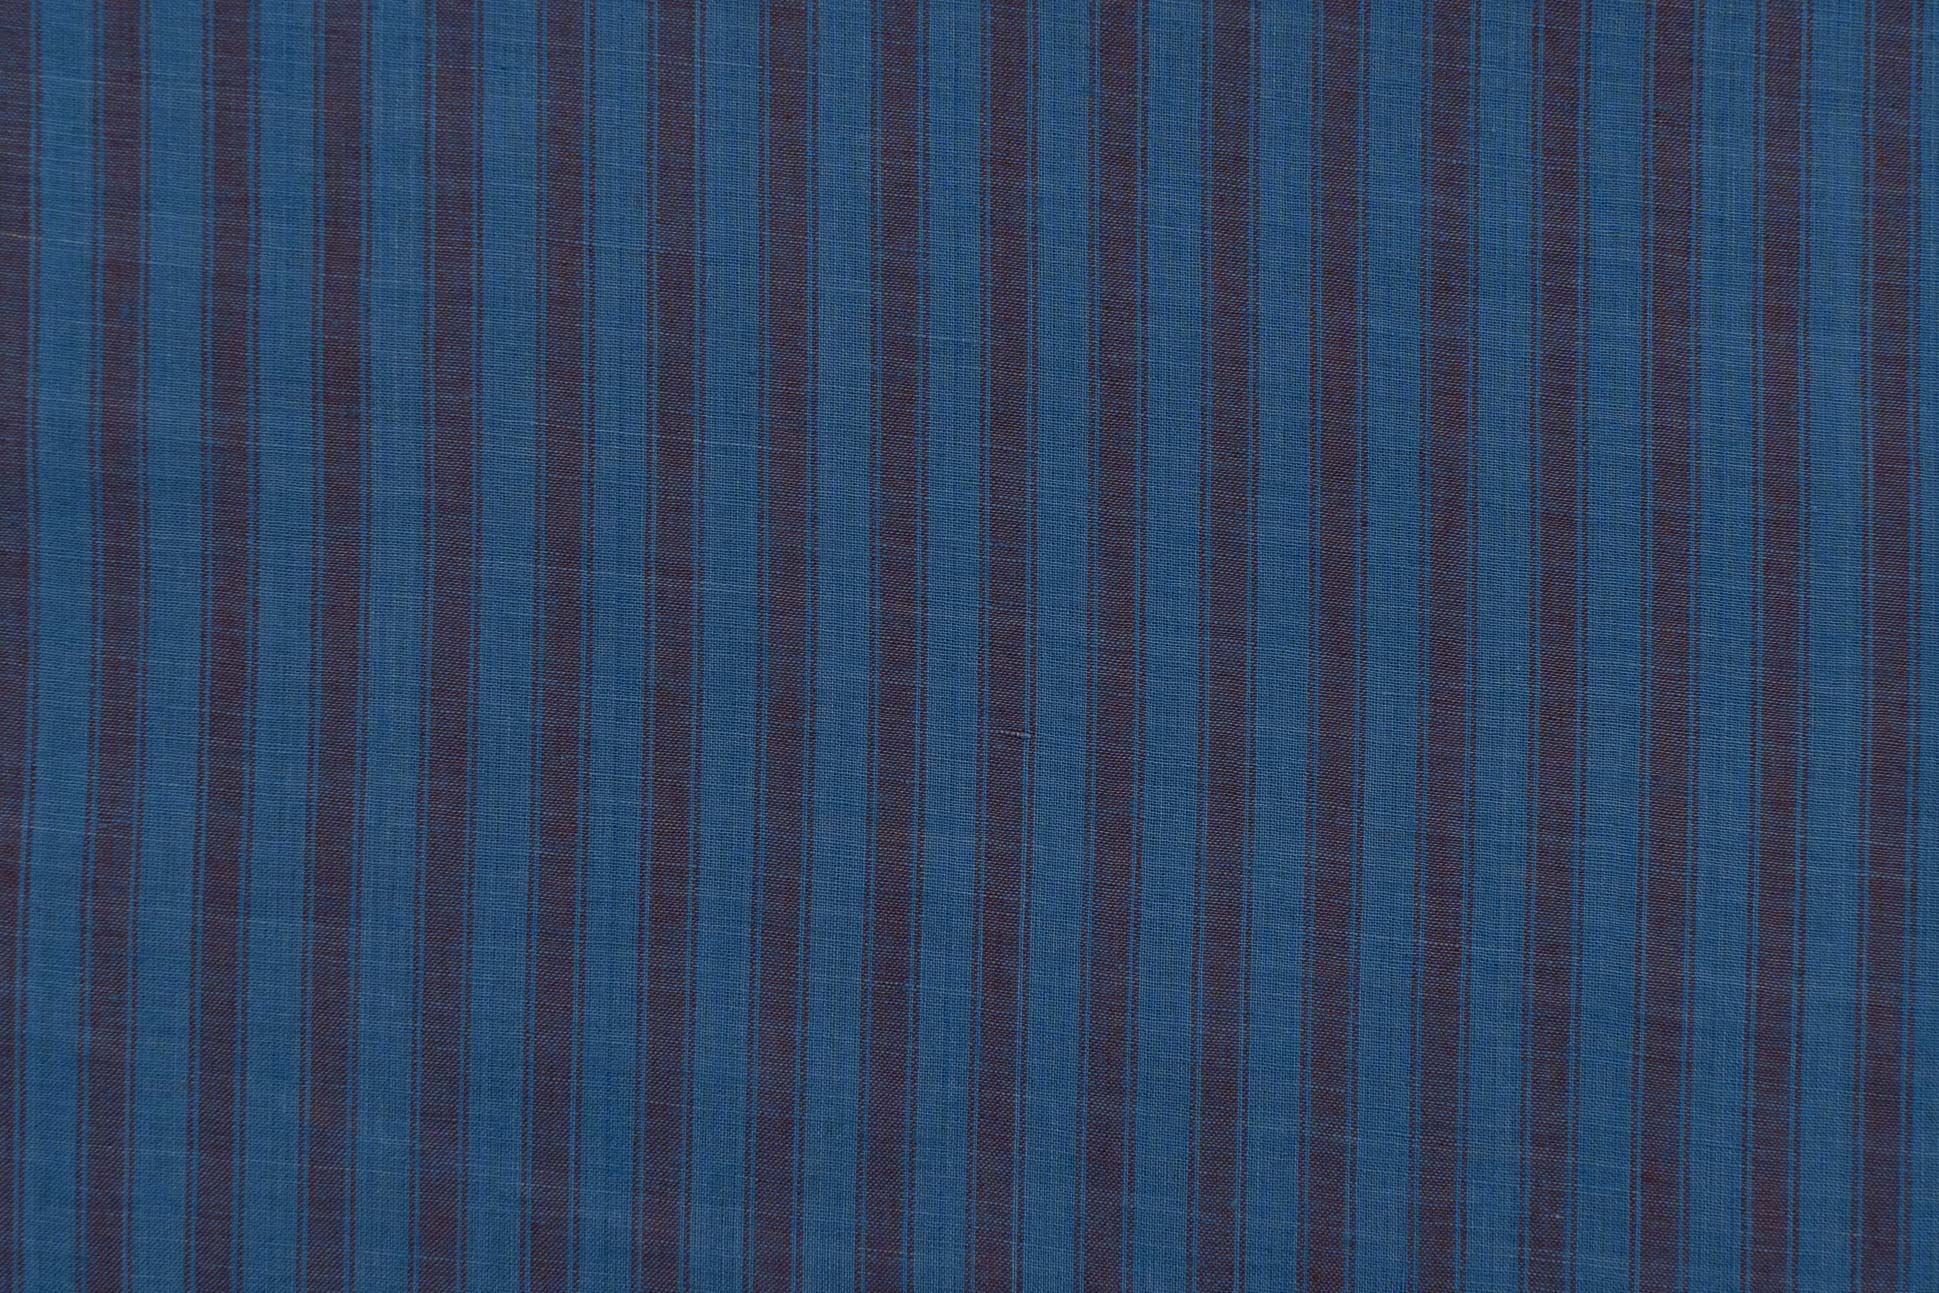 Azure Blue Handloom Khari Cotton Fabric